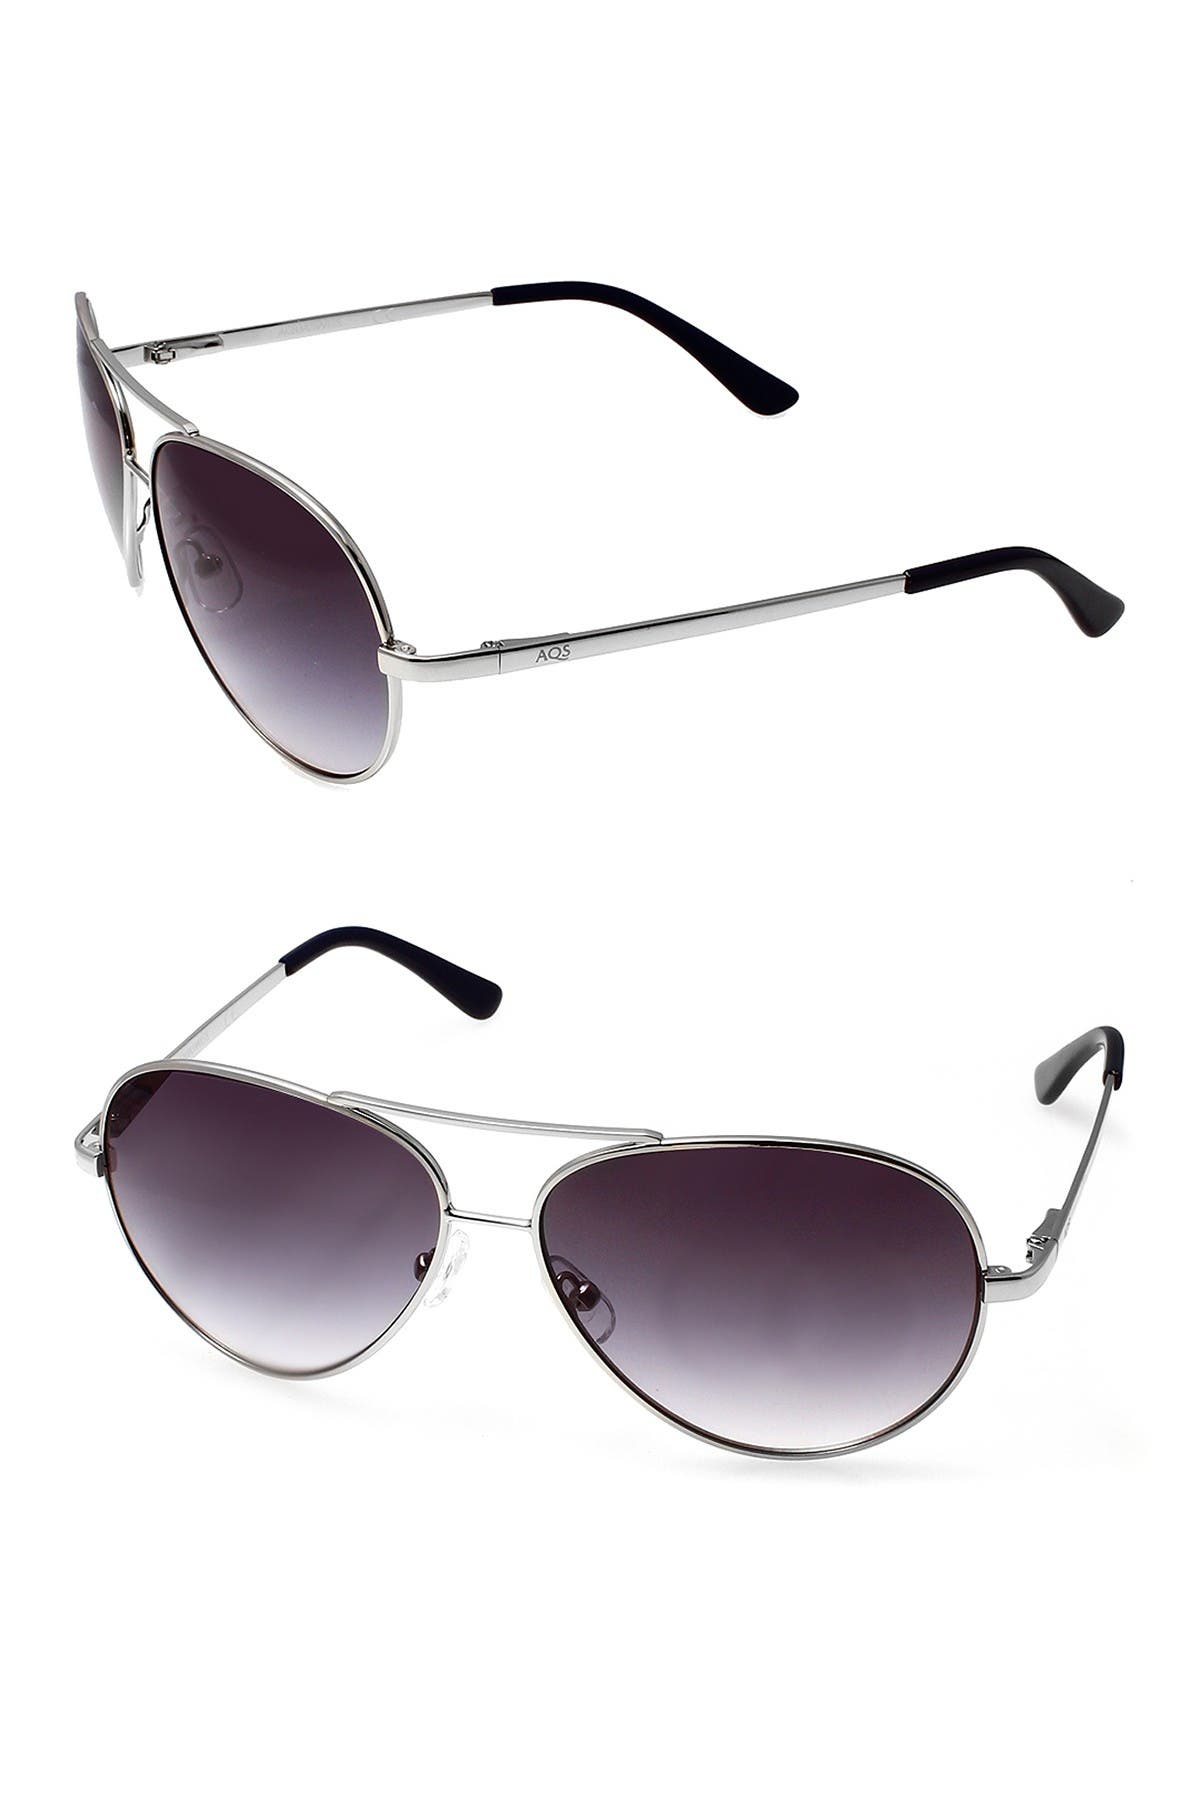 Aqs Aviator Ii Navy Blue/steel Sunglasses